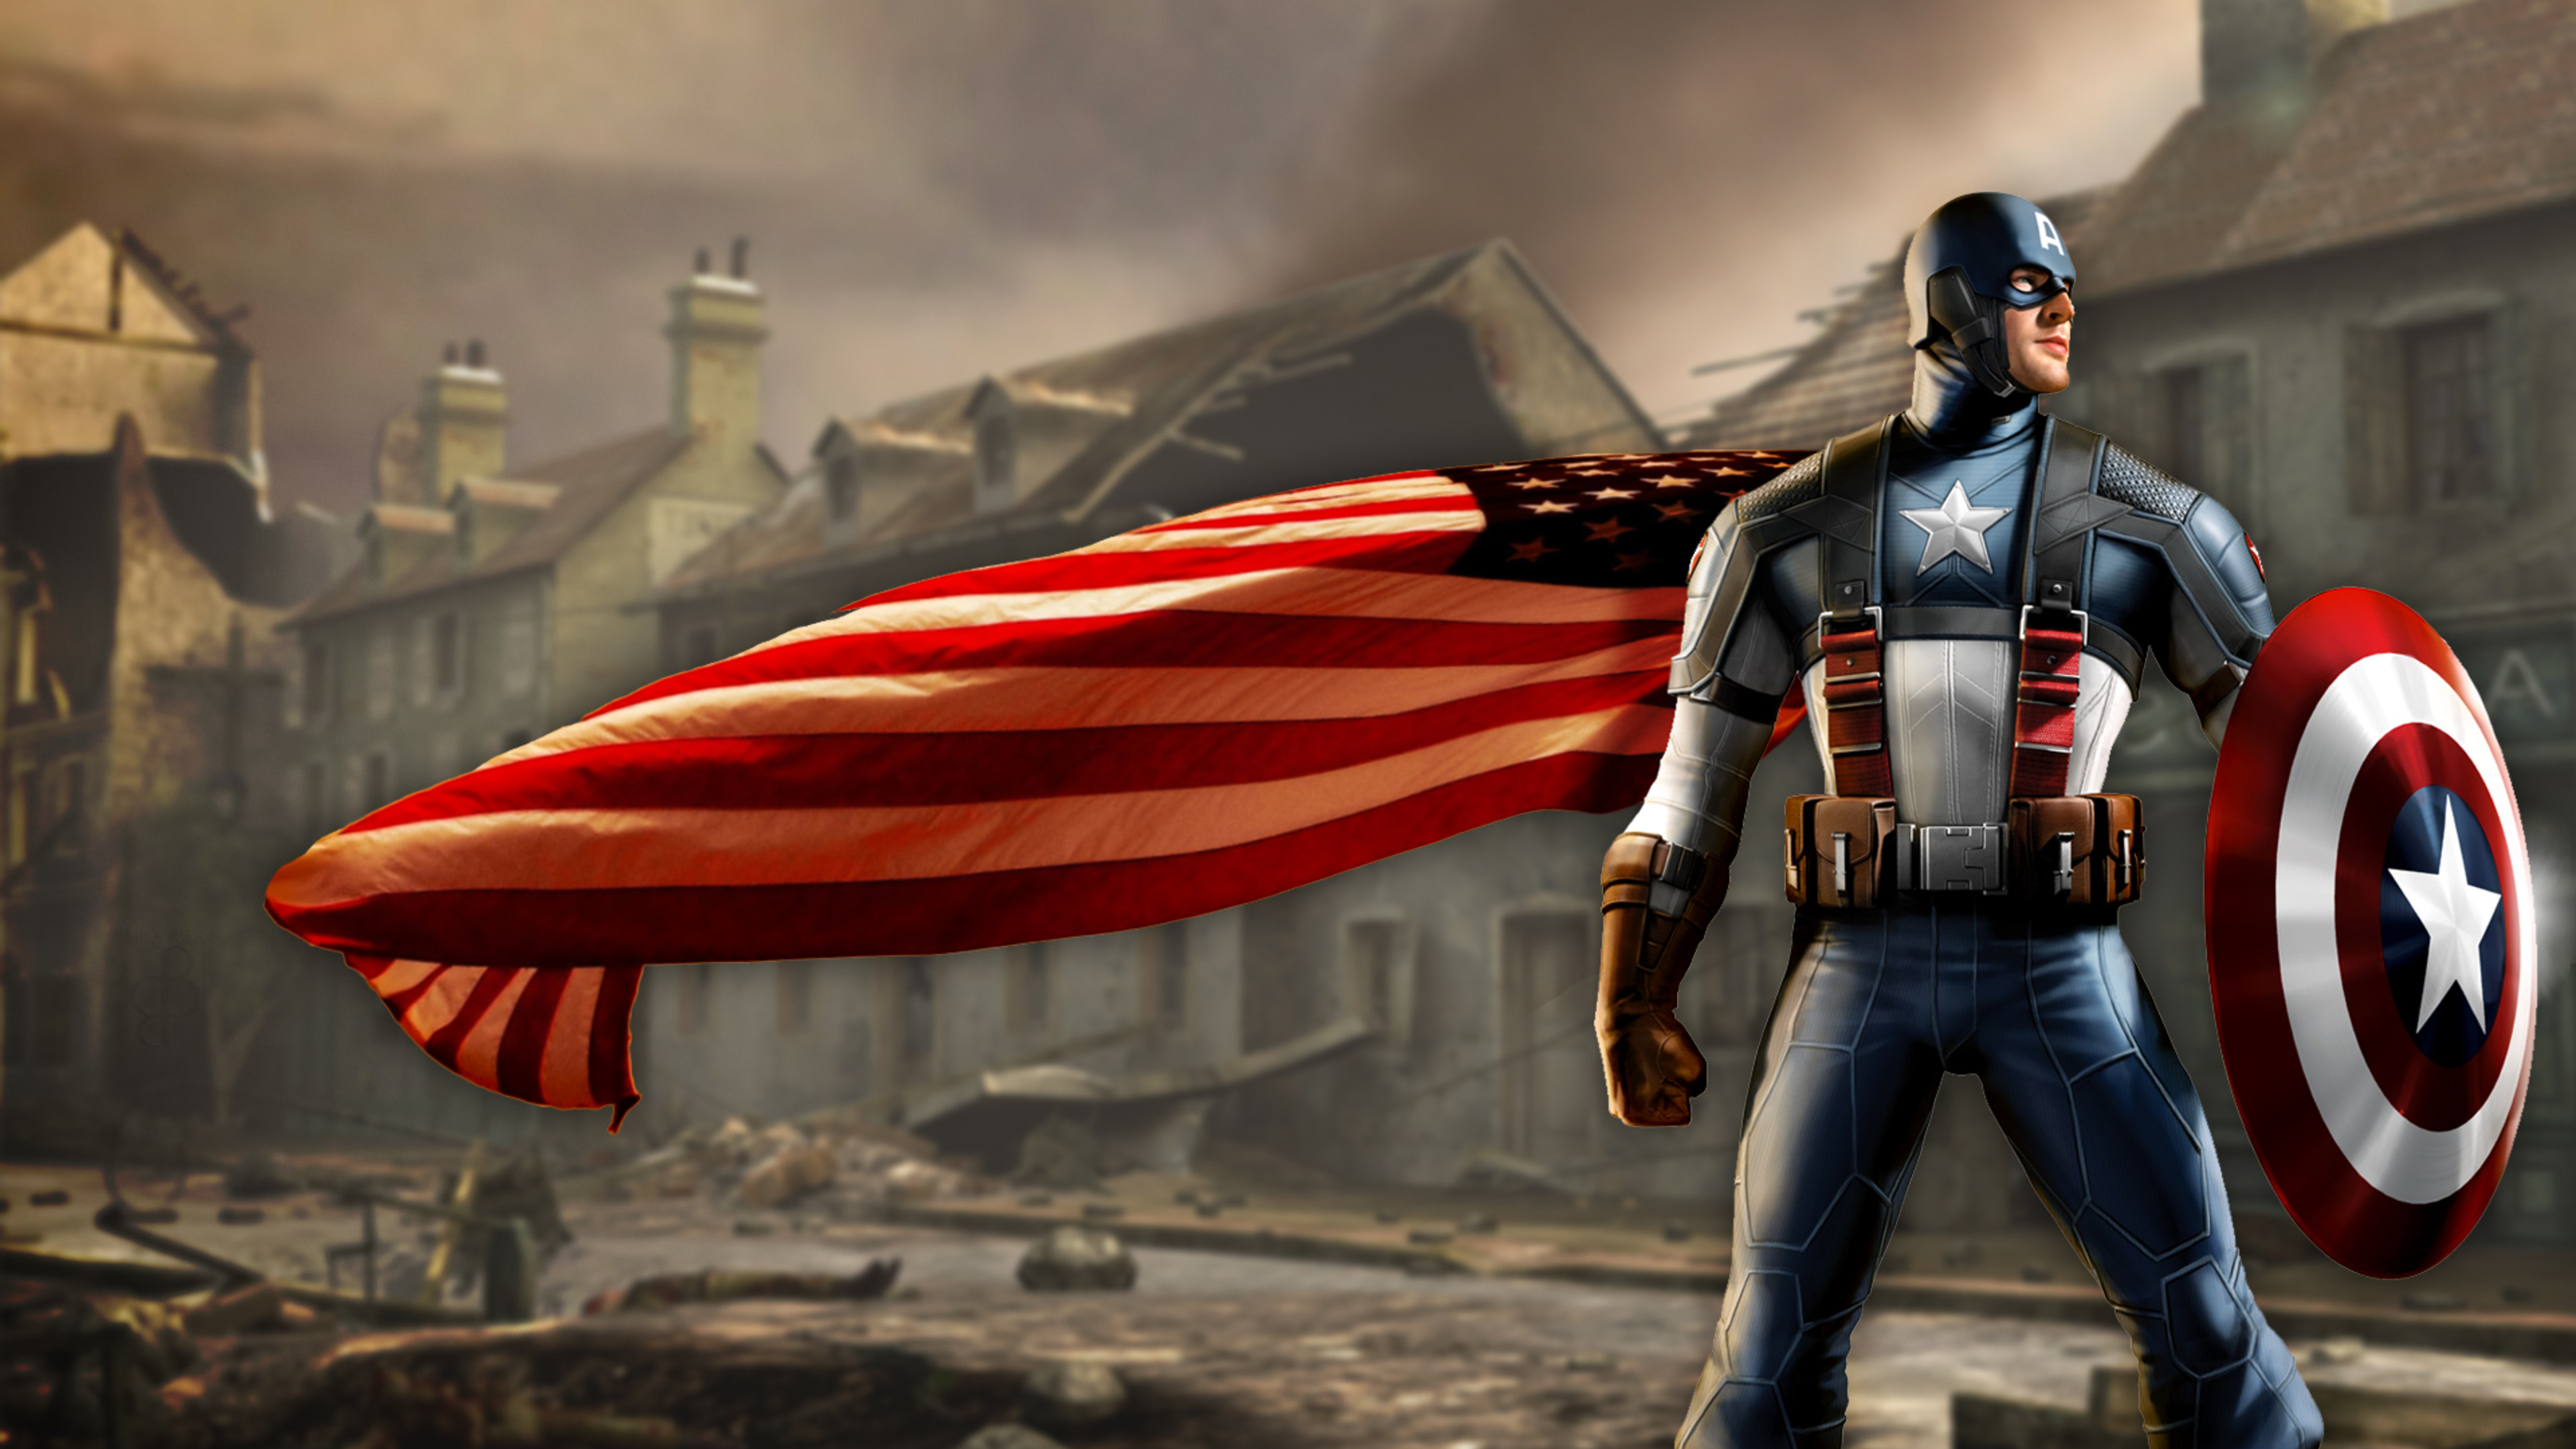 Captain America HD In 3840x2160 Resolution. captain-america-hd-ft.jpg. 